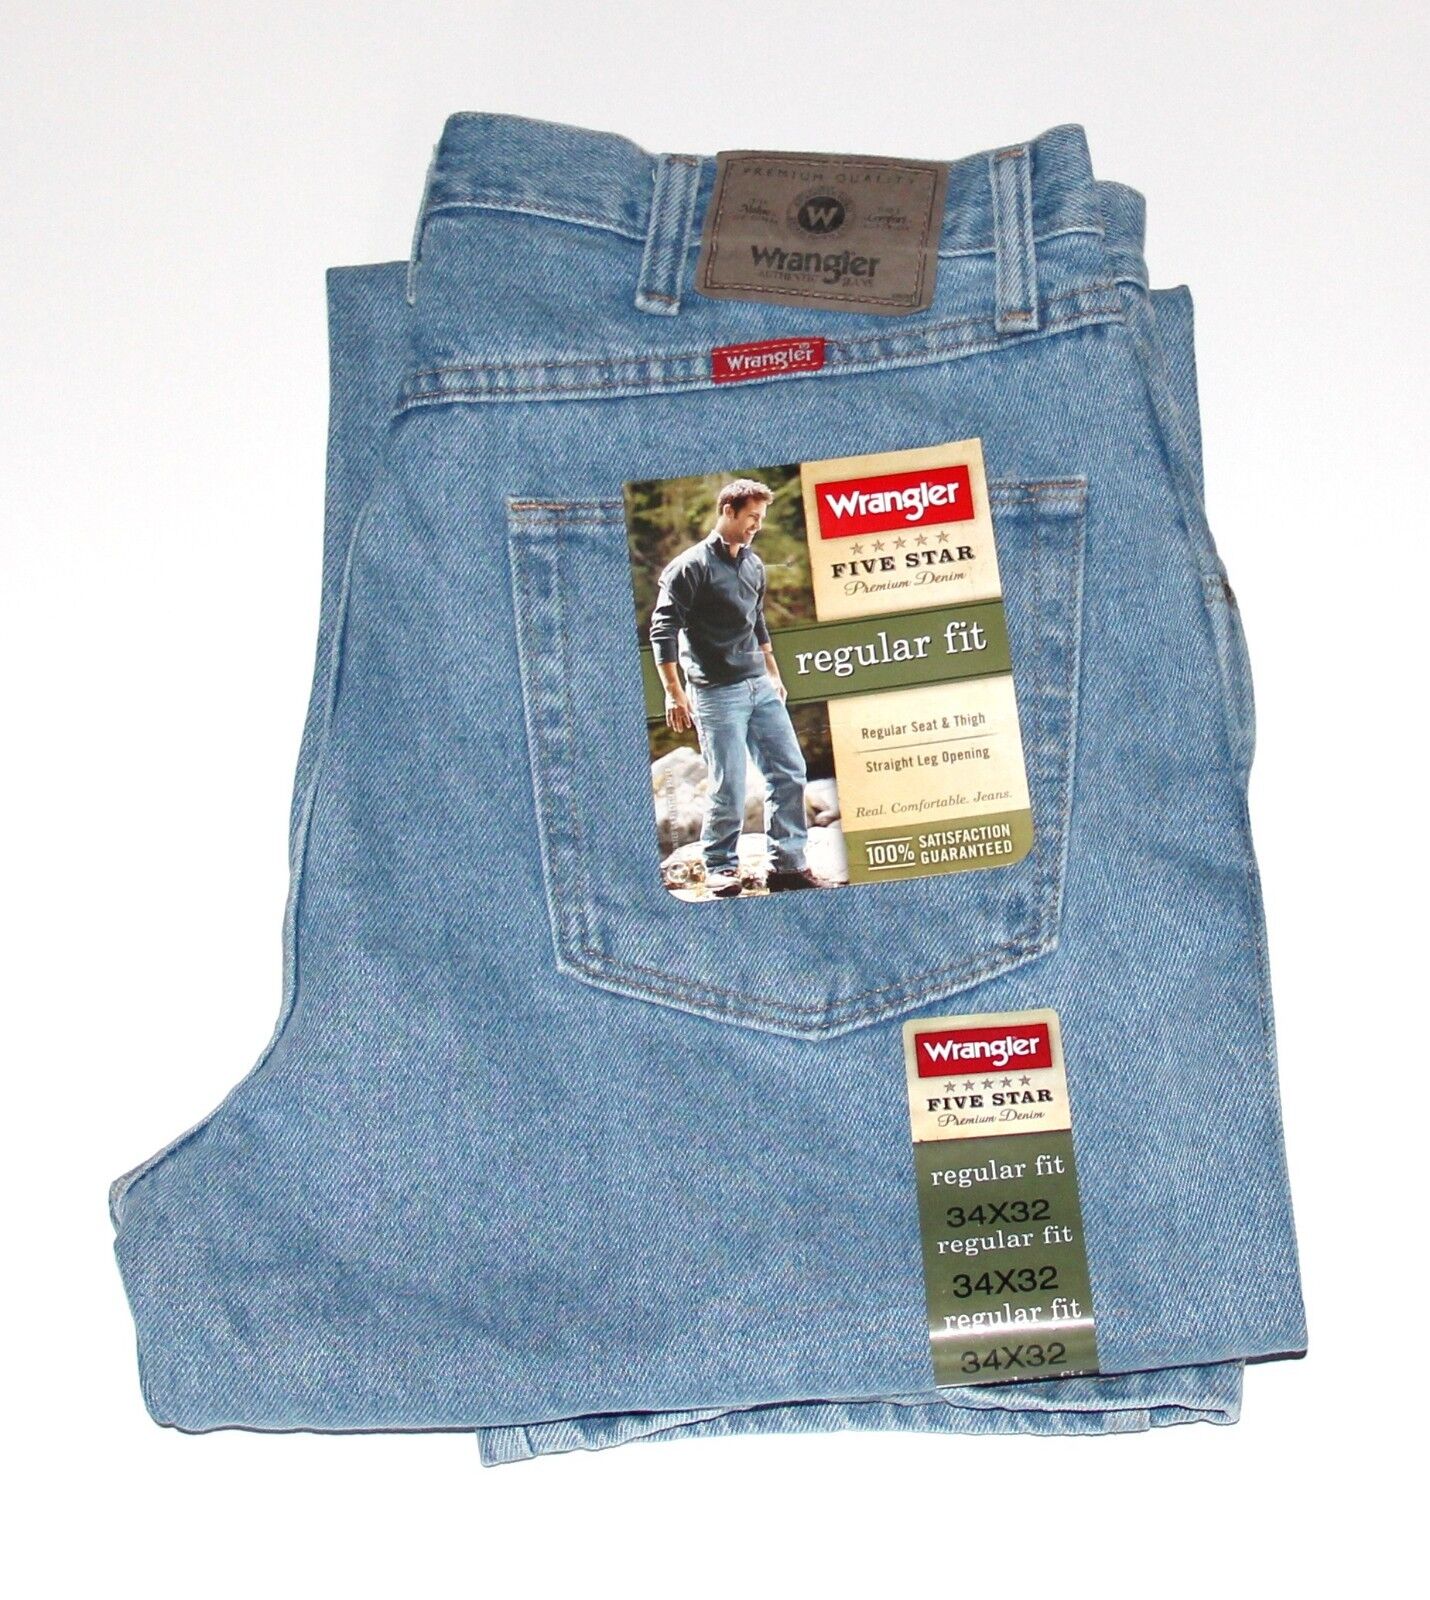 New Wrangler Five Star Regular Fit Jeans Men’s Sizes Five Colors 100% Cotton 